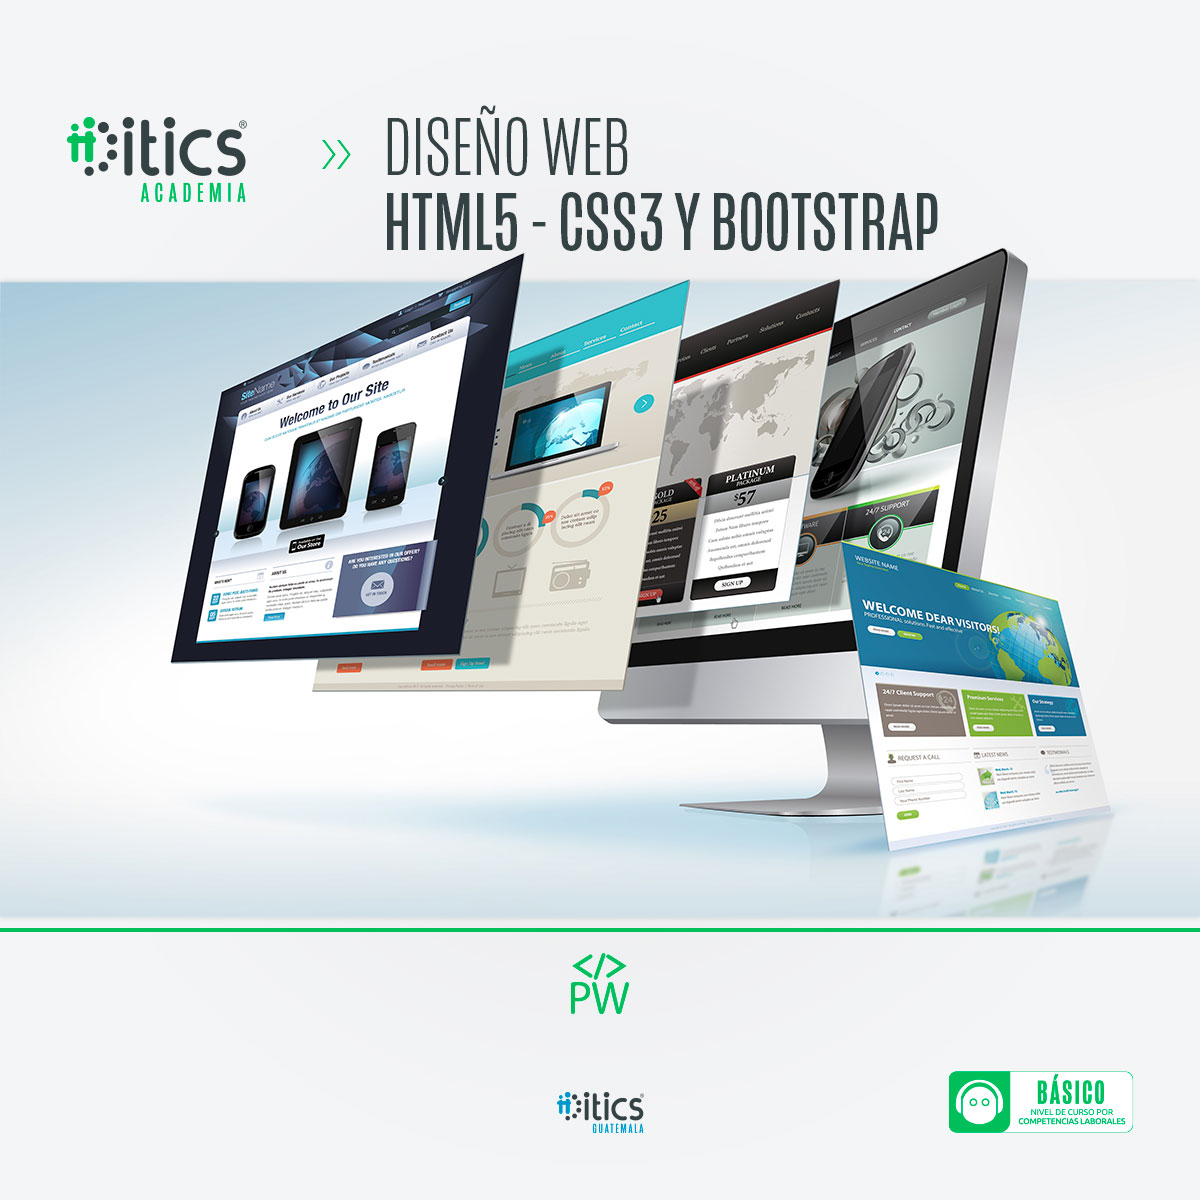 Diseño Web - HTML5, CSS3 y Bootstrap